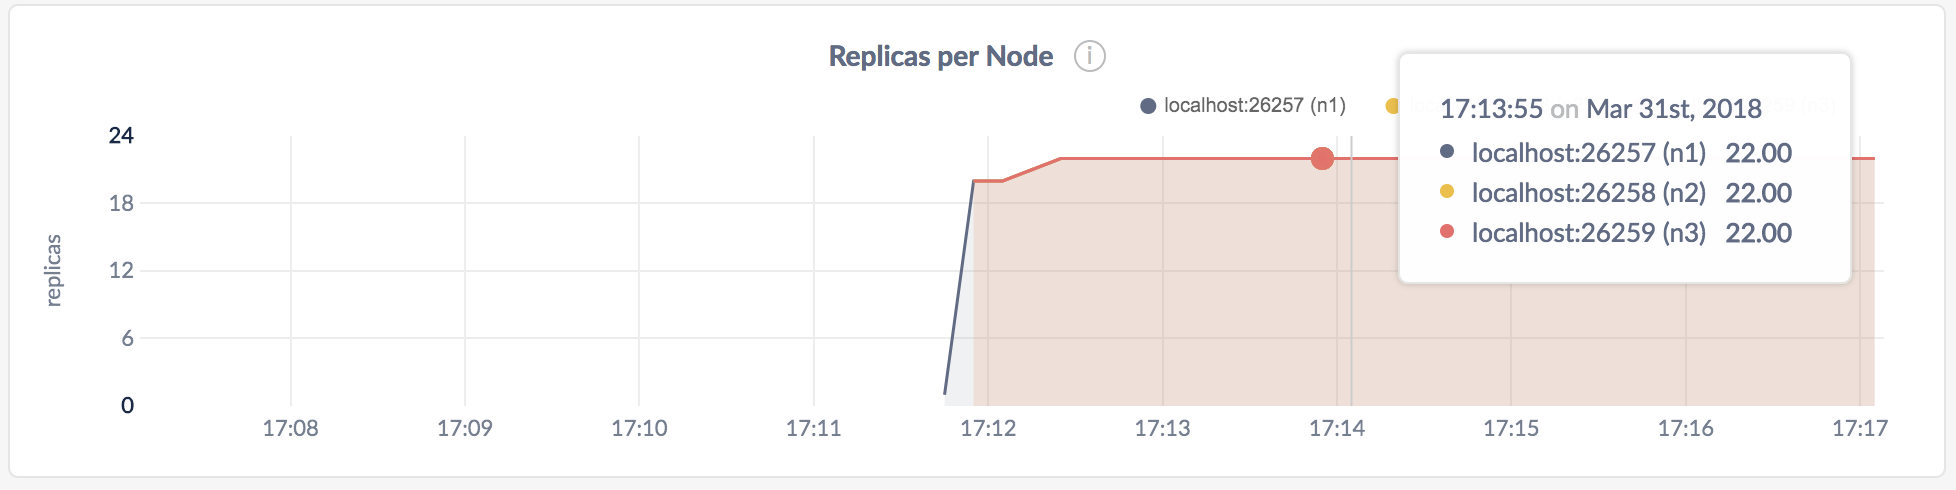 CockroachDB Admin UI Replicas per node graph